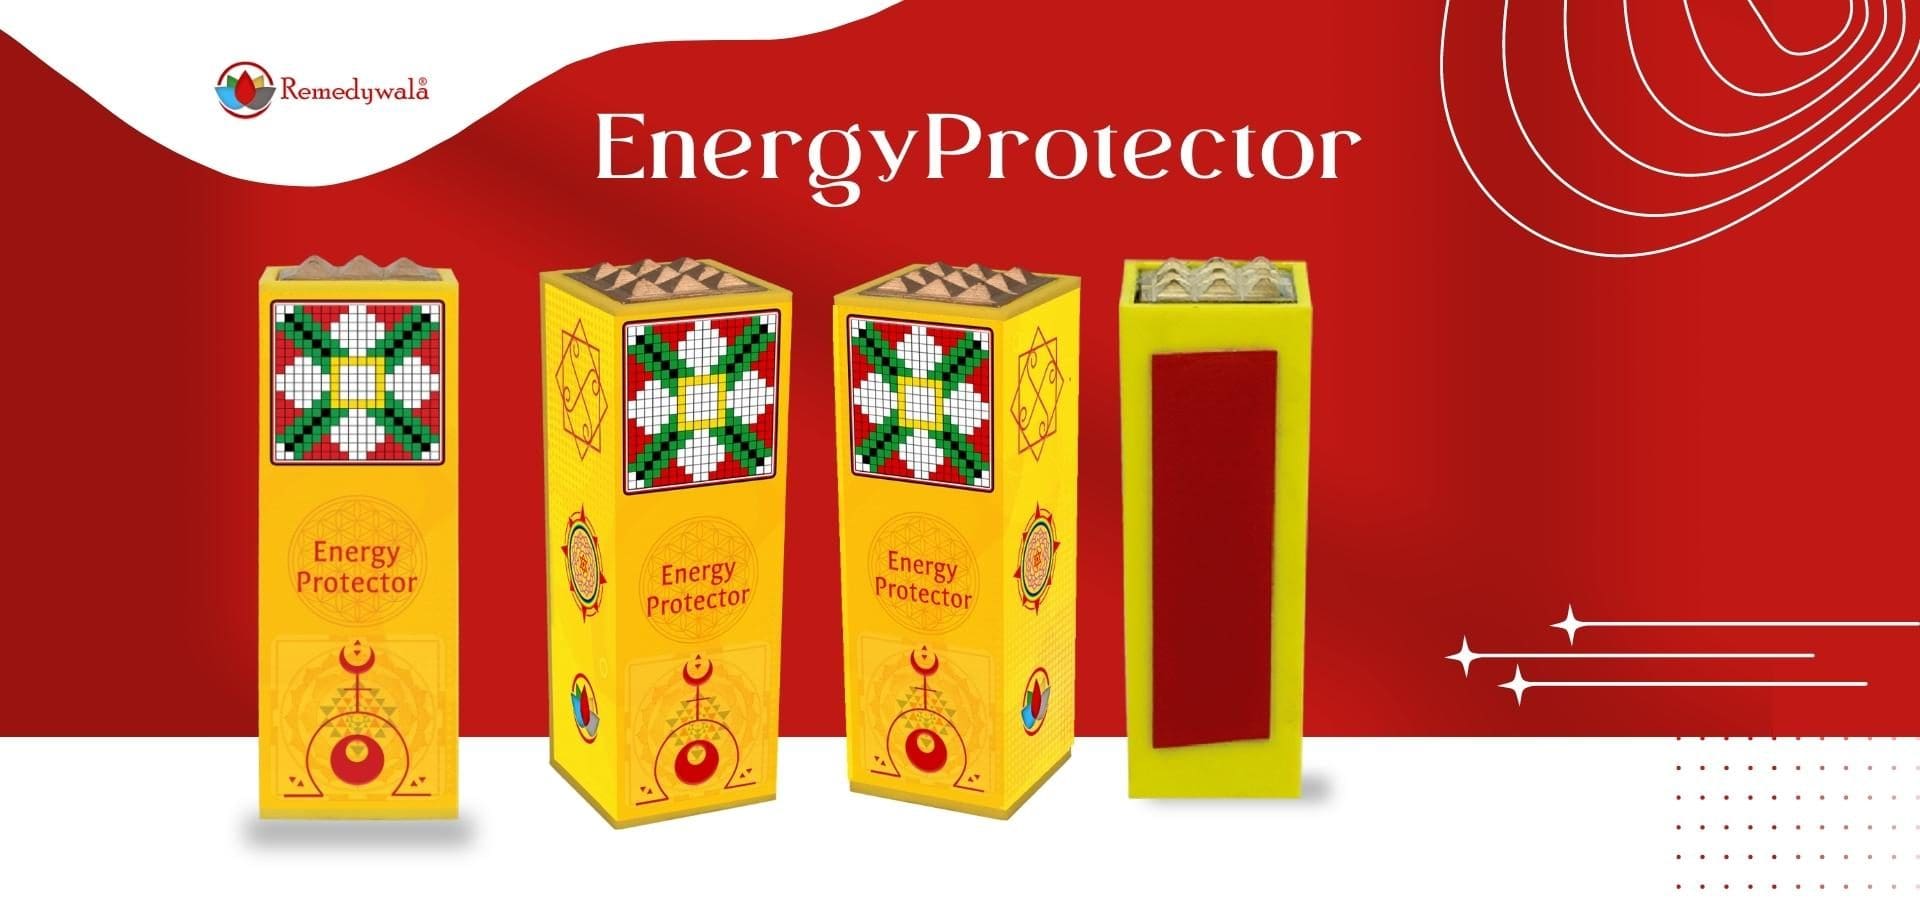 Energy Protector